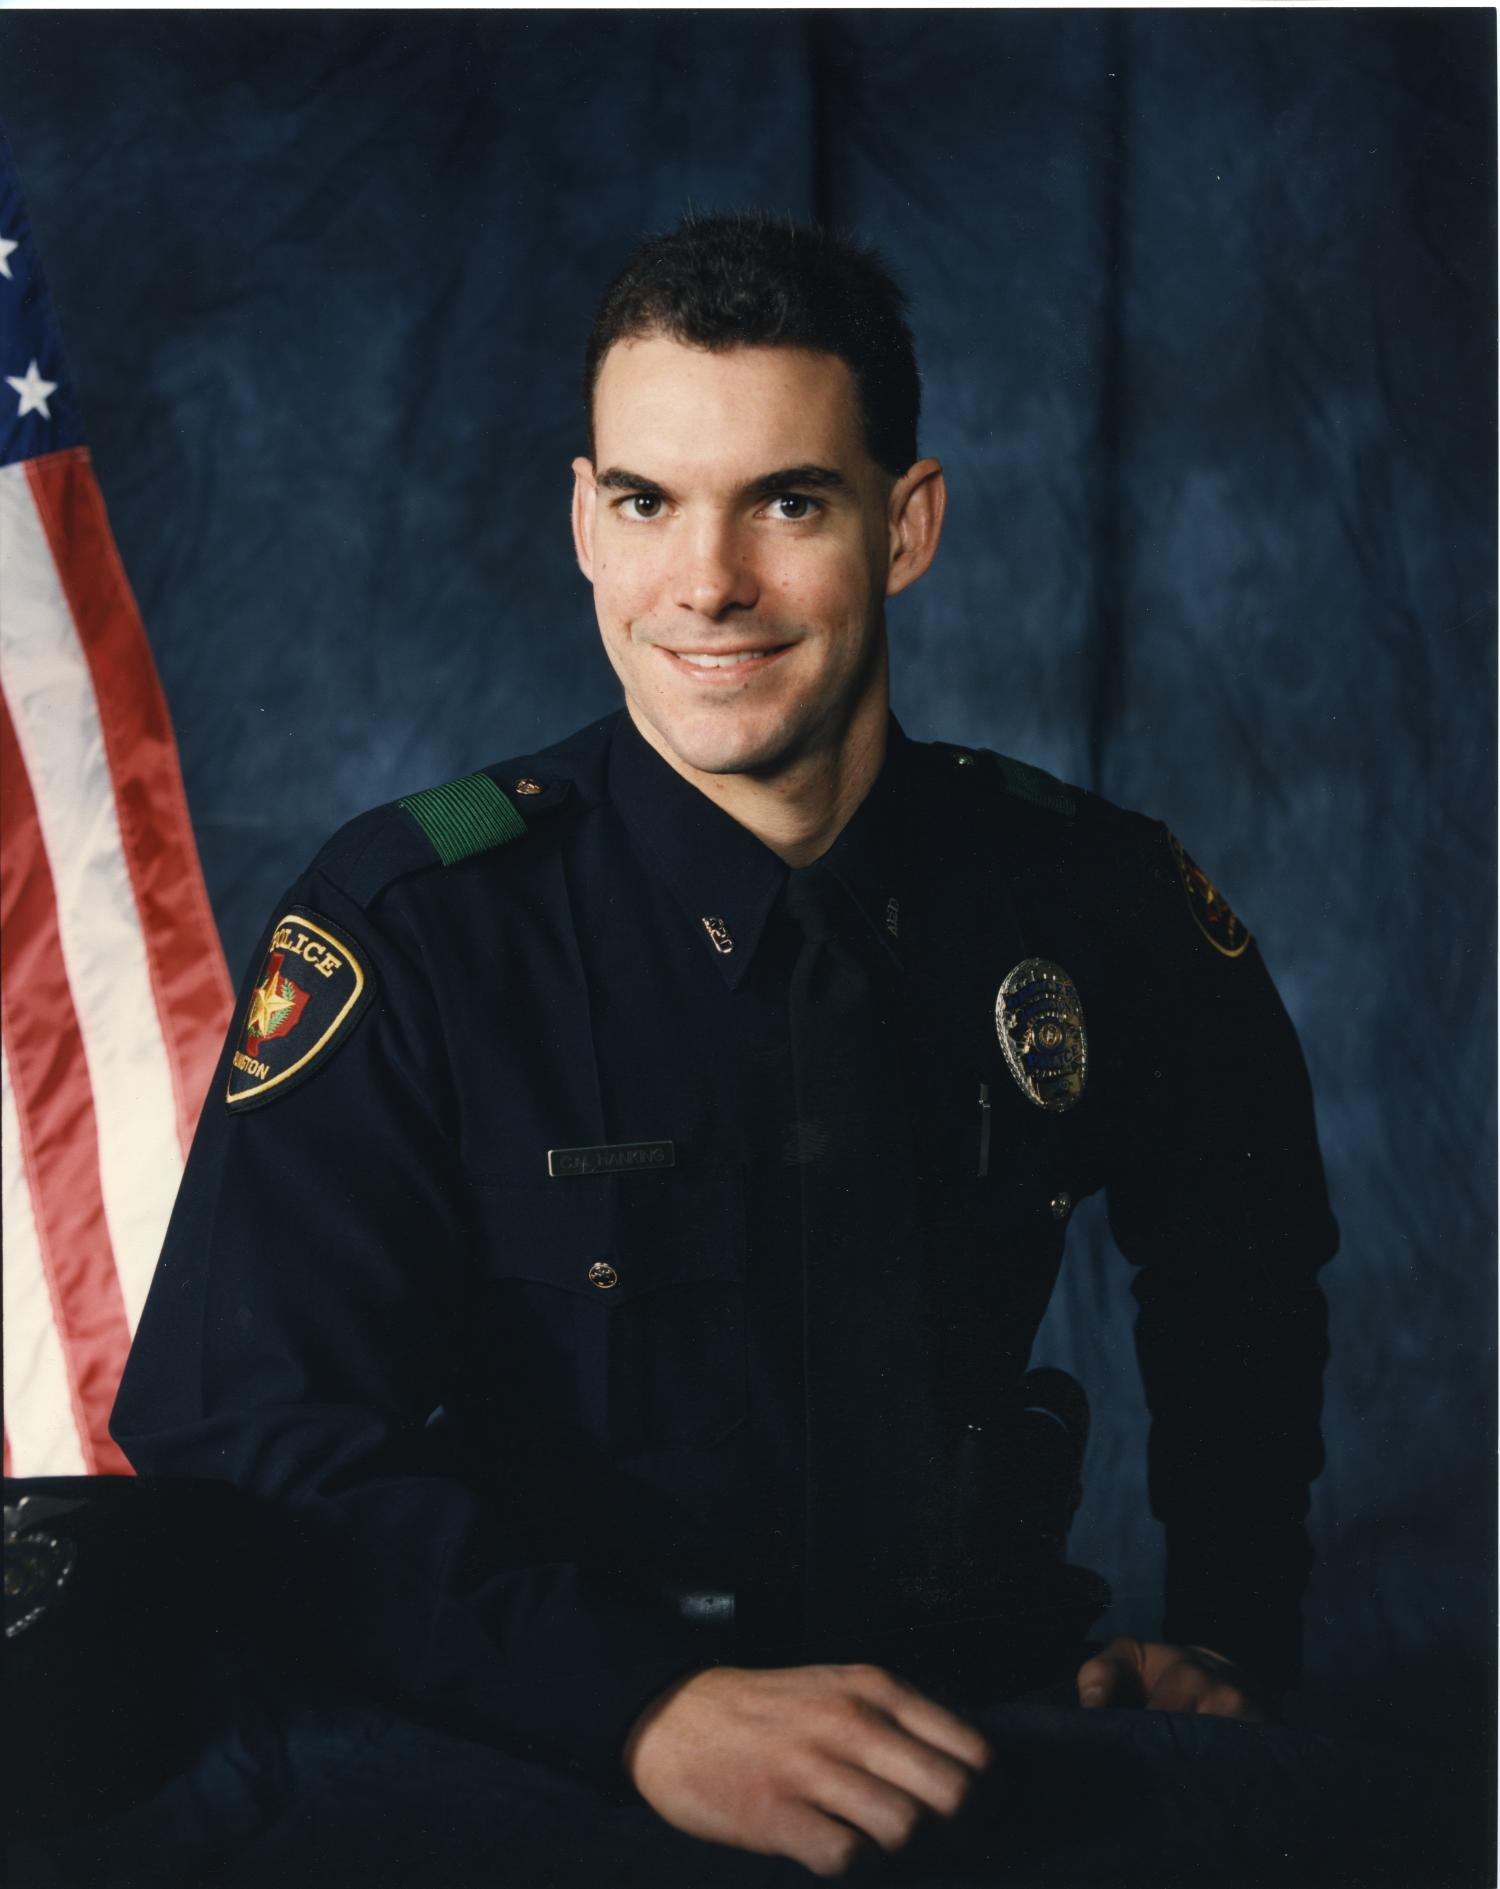 [Arlington Police Officer Craig M. Hanking, portrait] - The Portal to